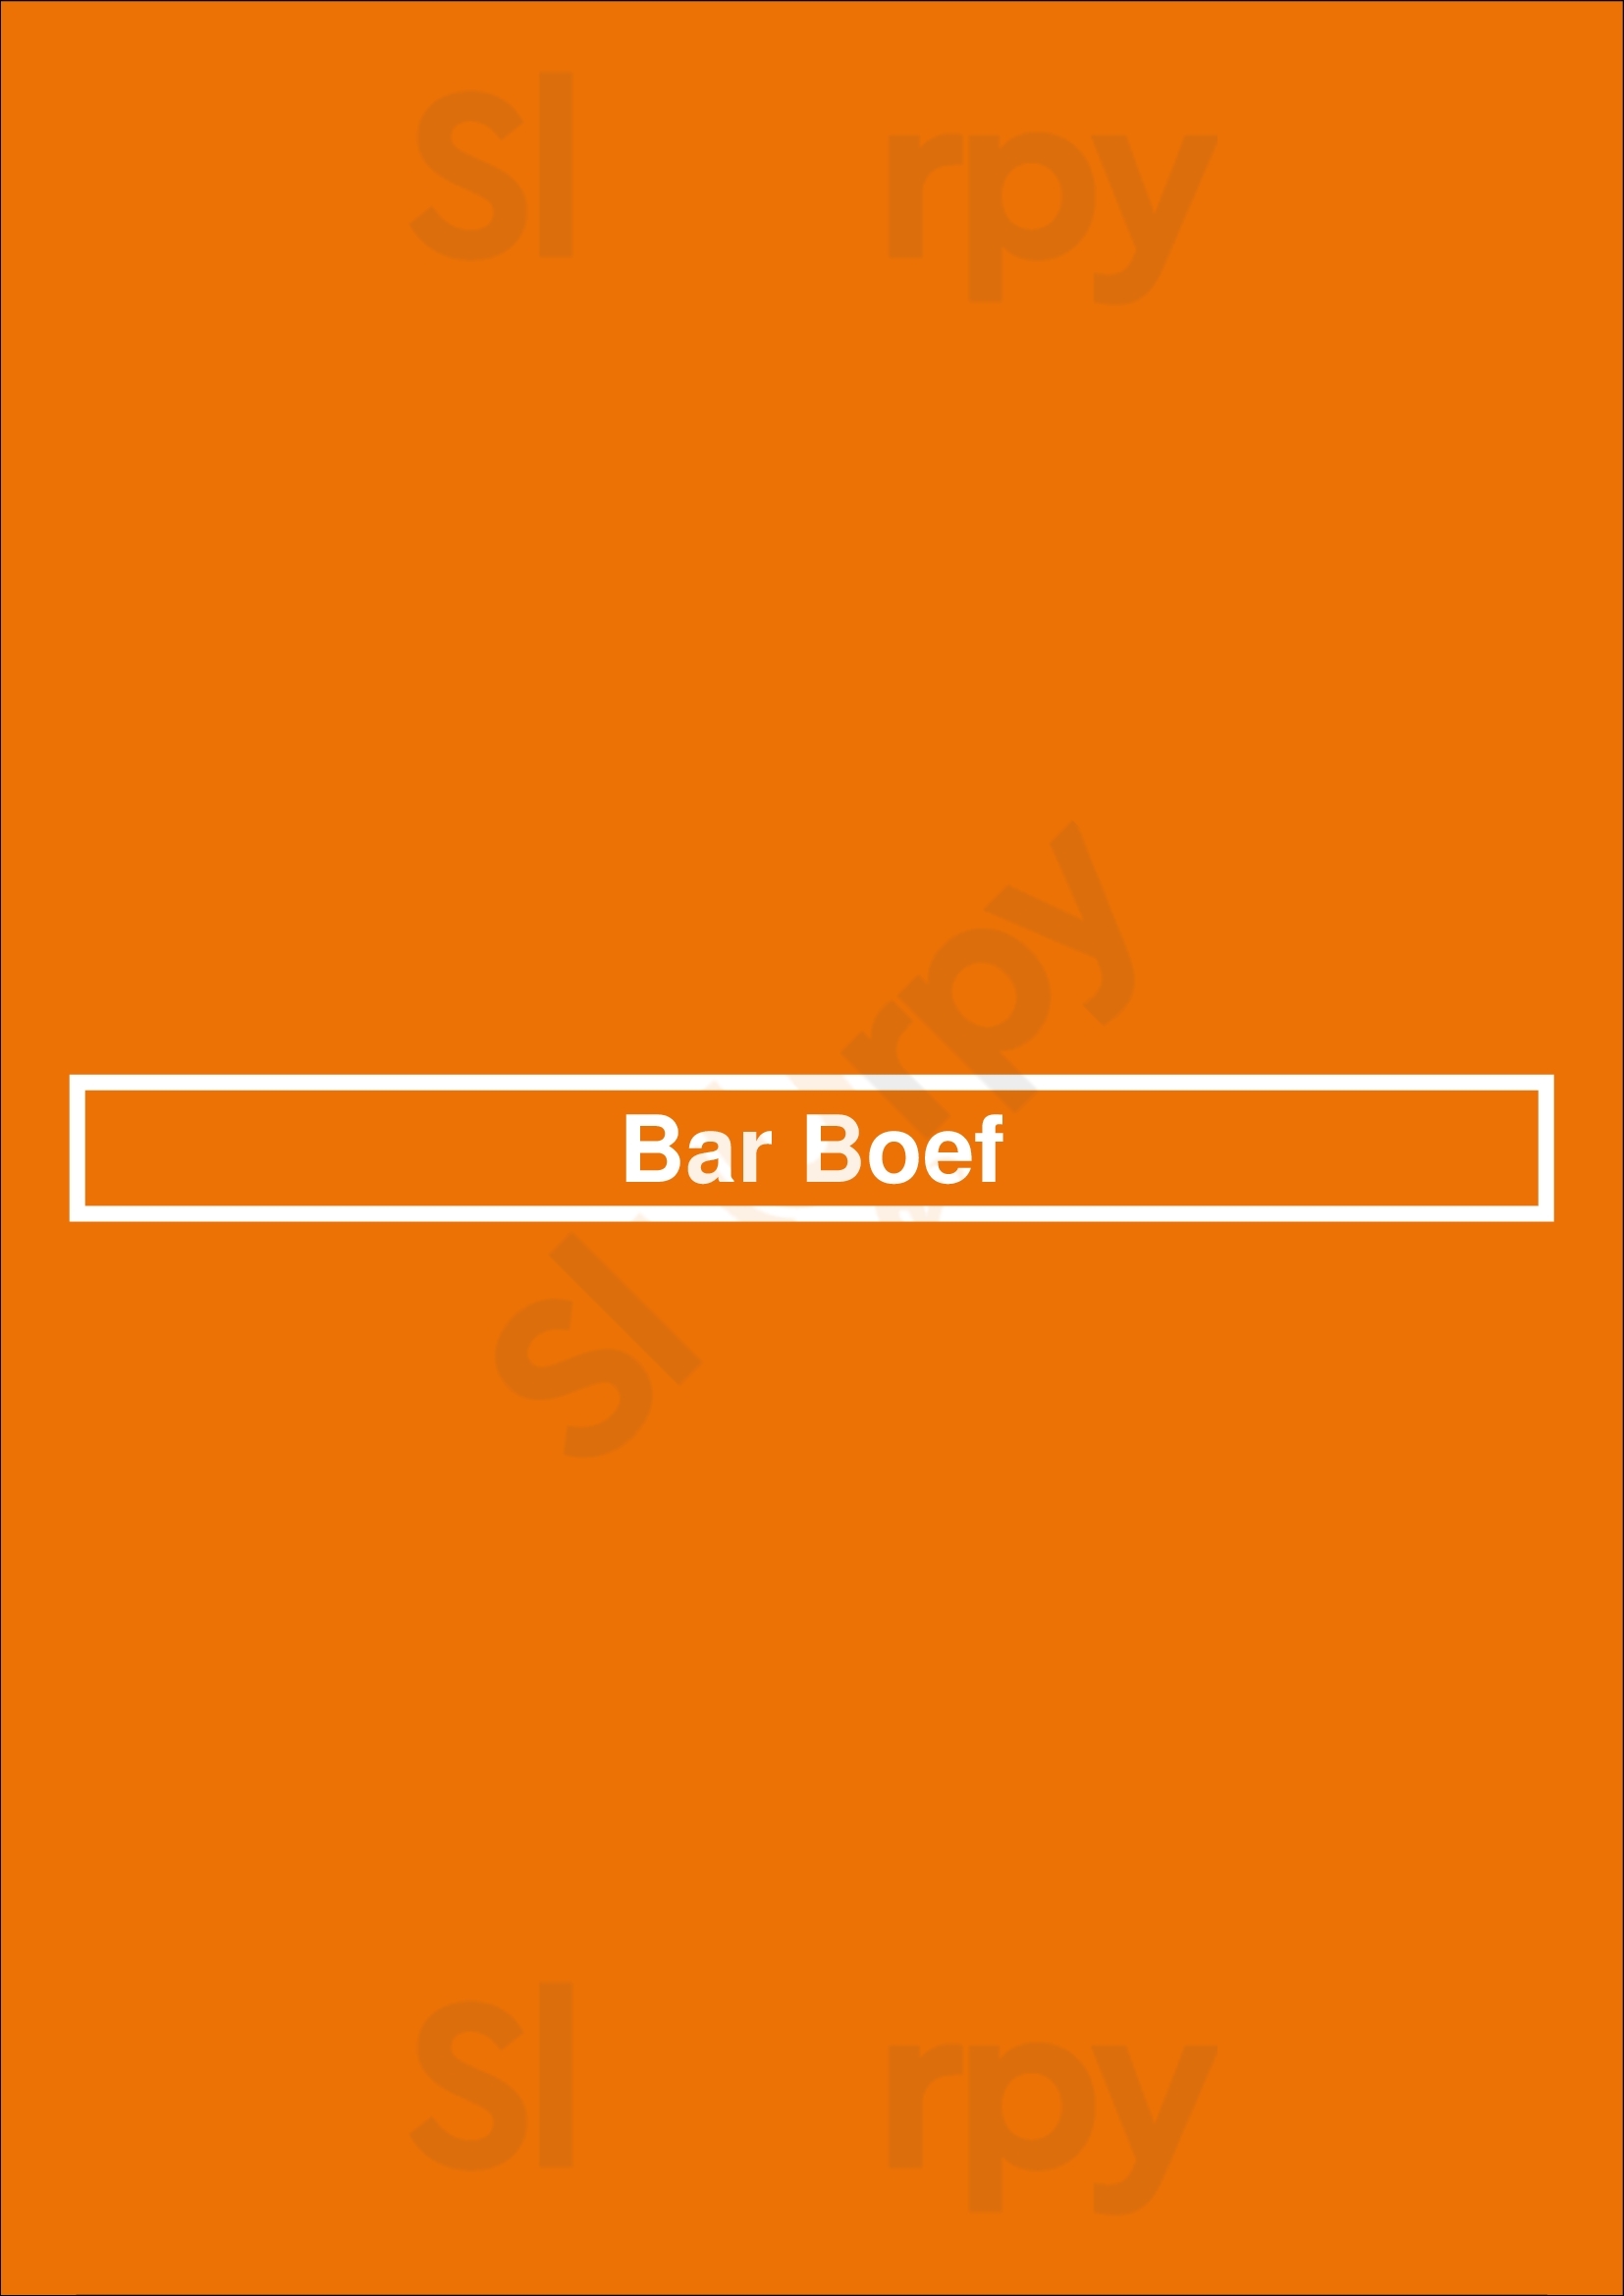 Bar Boef Haarlem Menu - 1